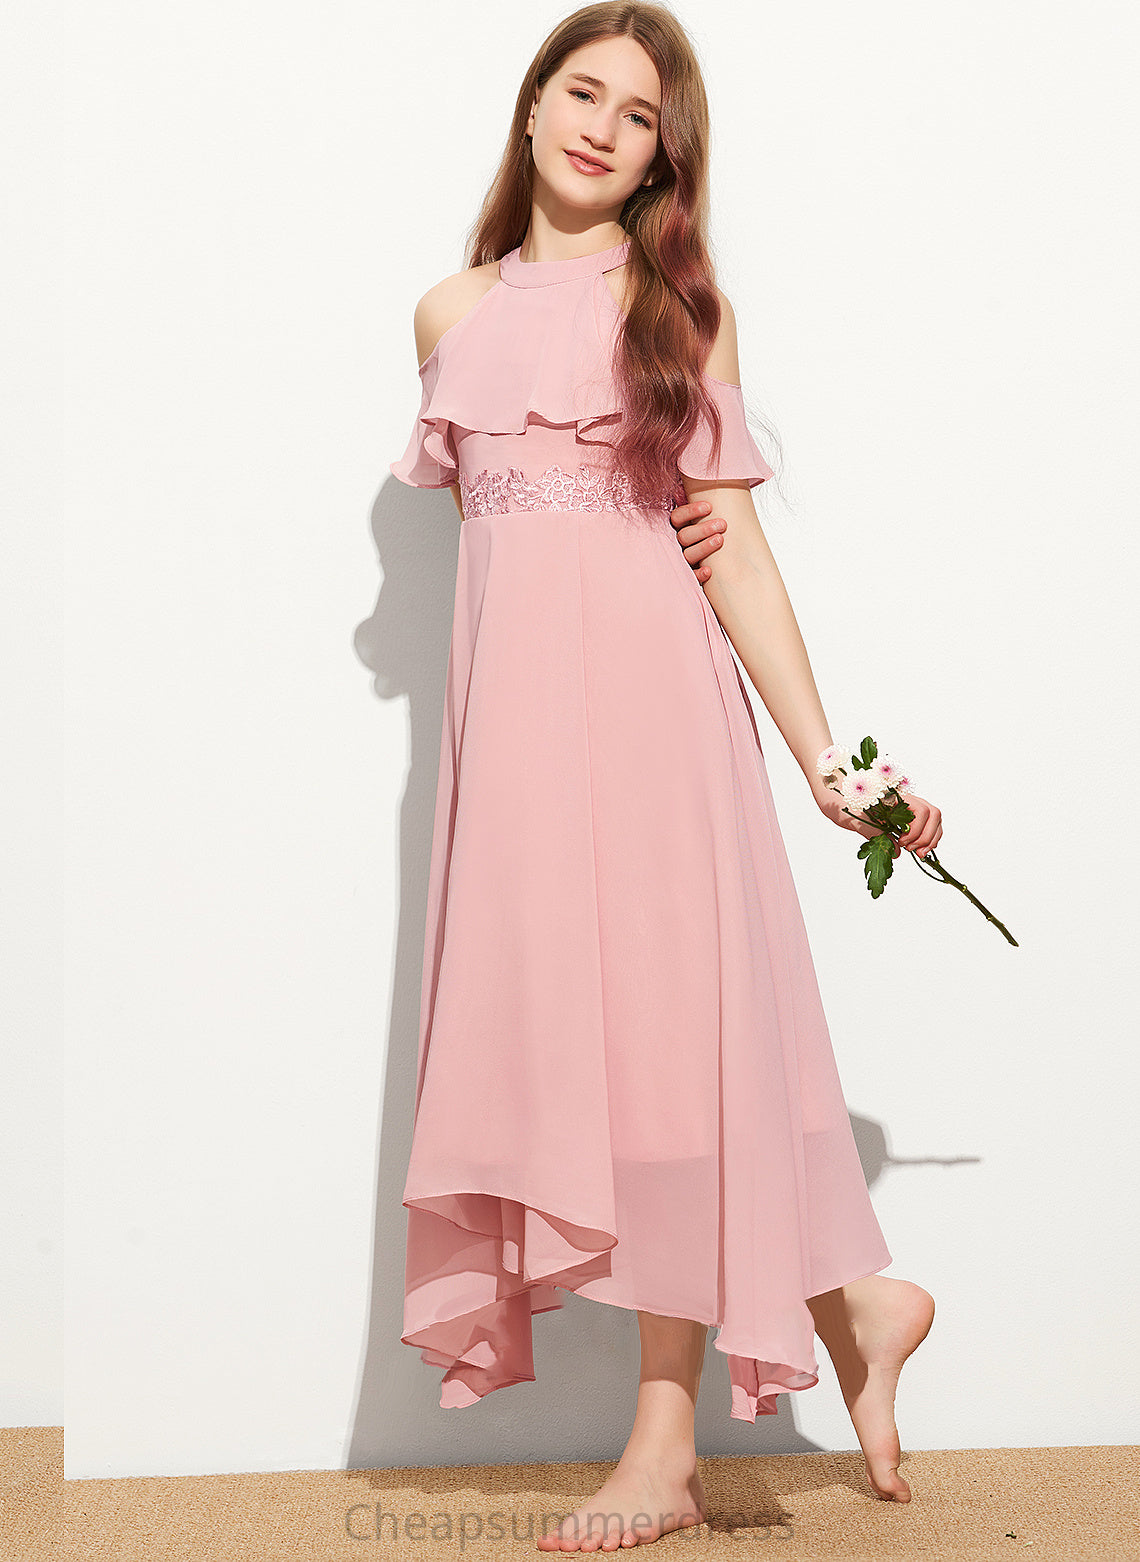 A-Line Scoop Tea-Length Chiffon Lace Junior Bridesmaid Dresses Carleigh Neck